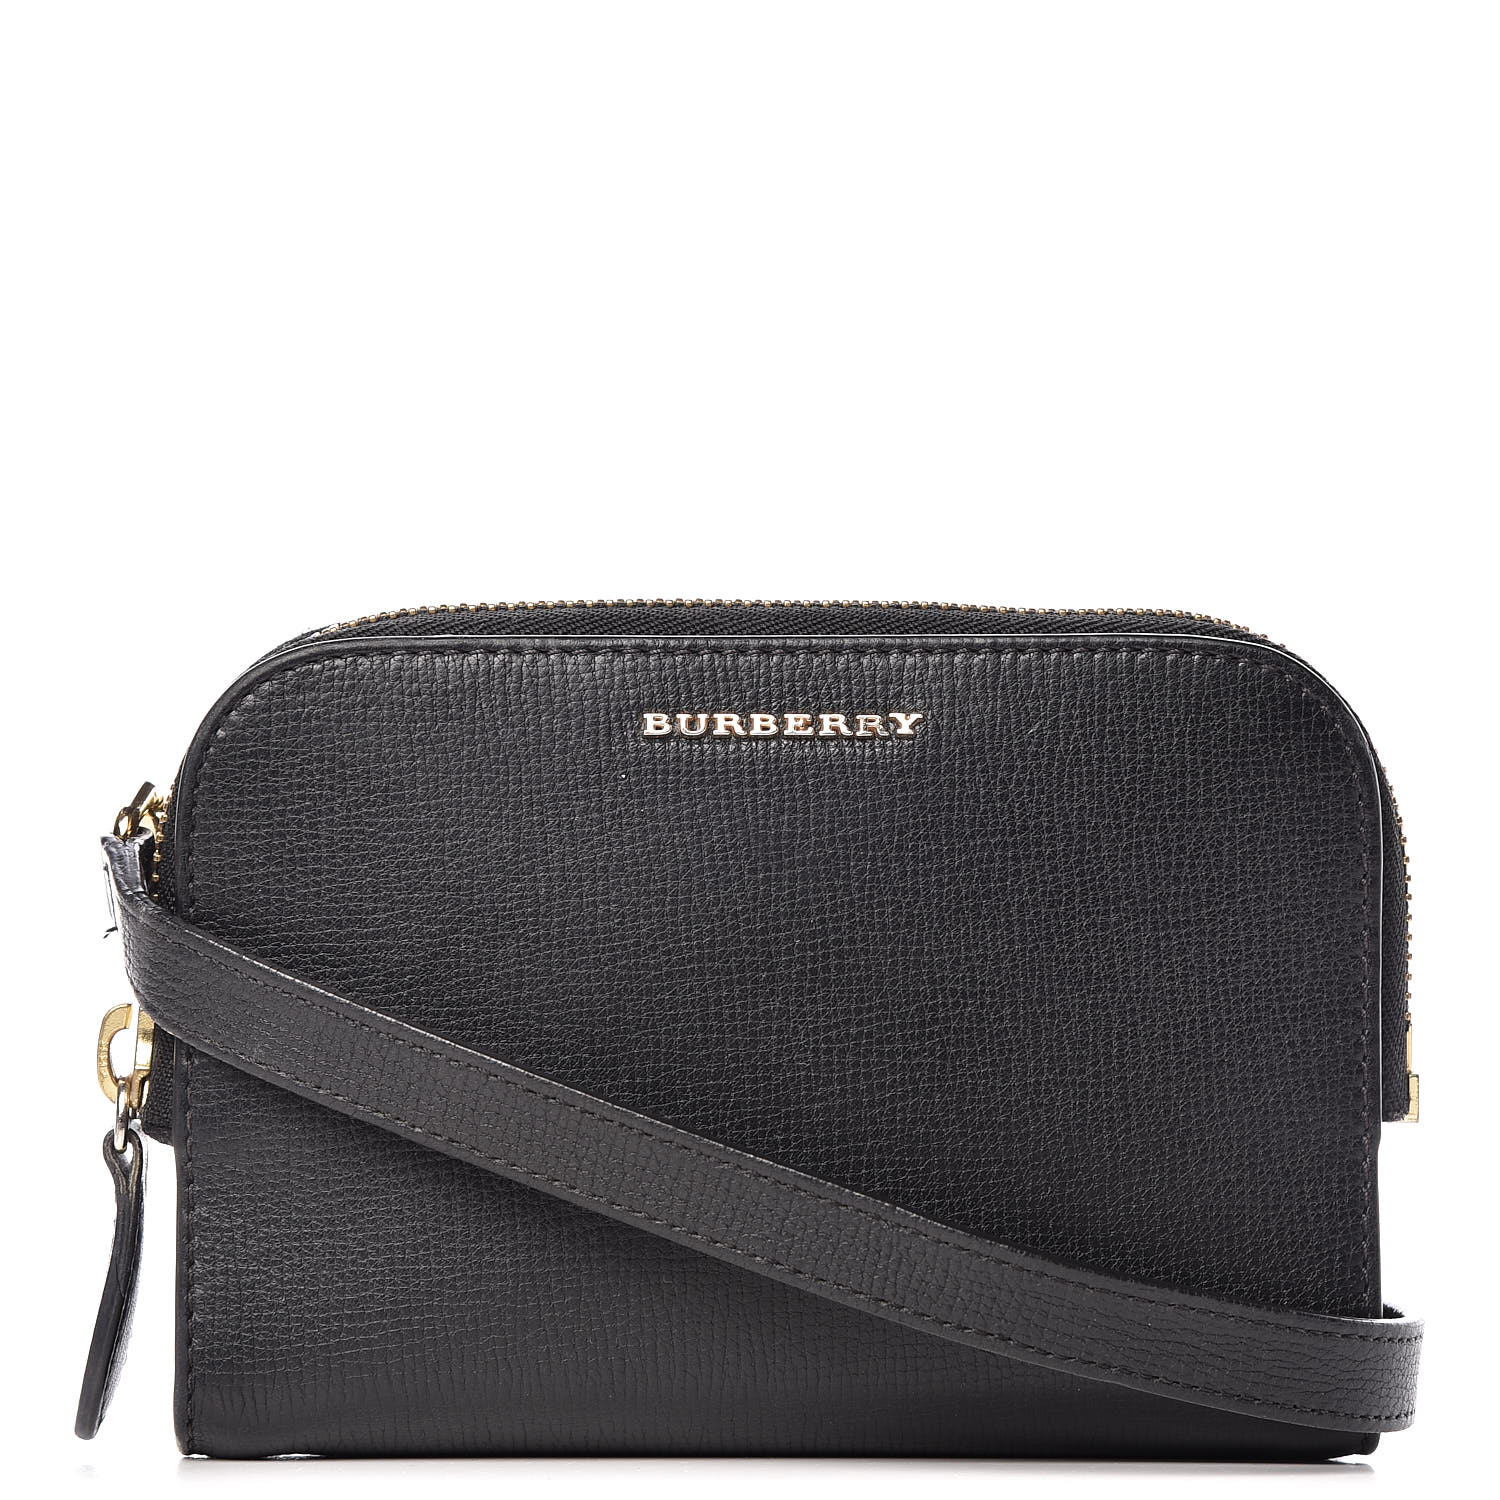 burberry small crossbody bag